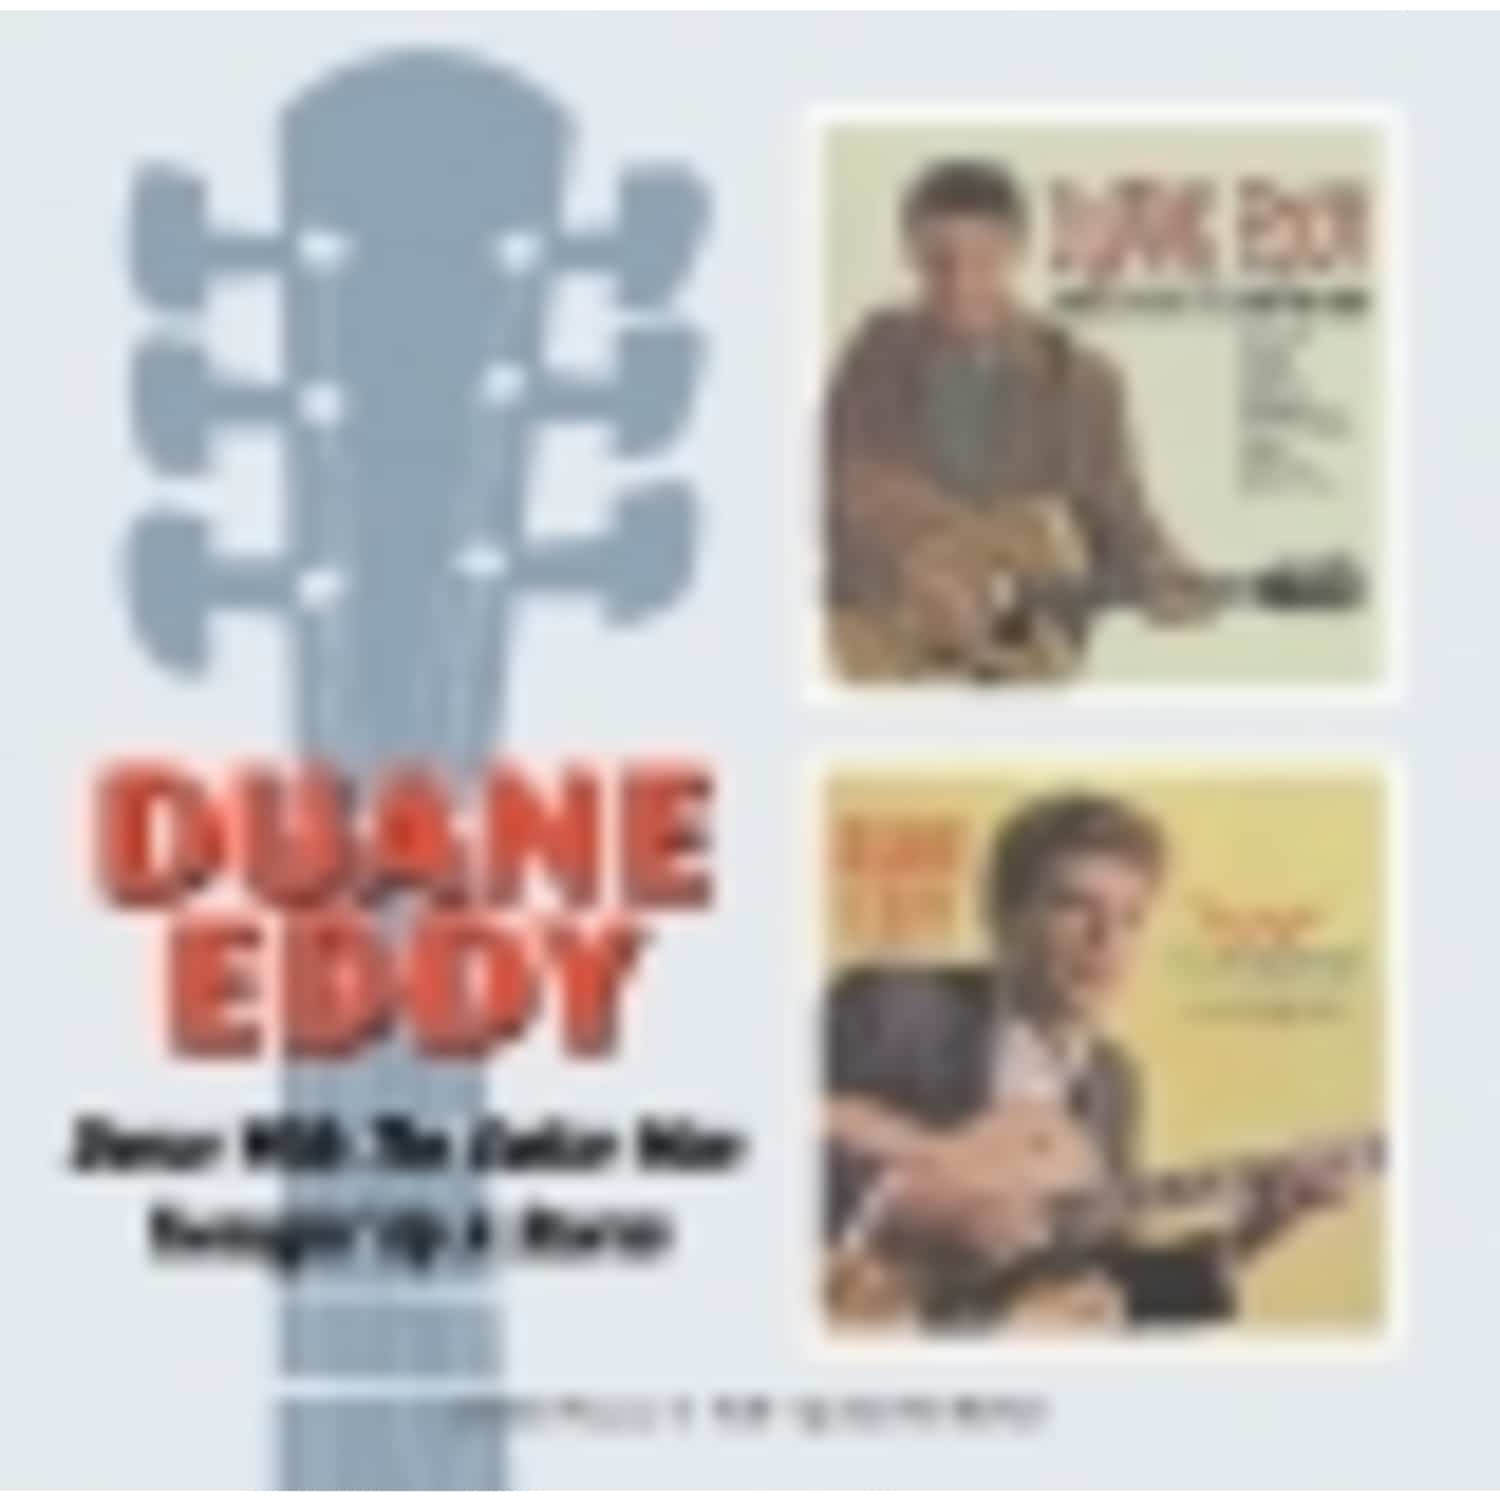 Duane Eddy - DANCE WITH THE GUITAR MAN / TWANGIN UP A STORM 